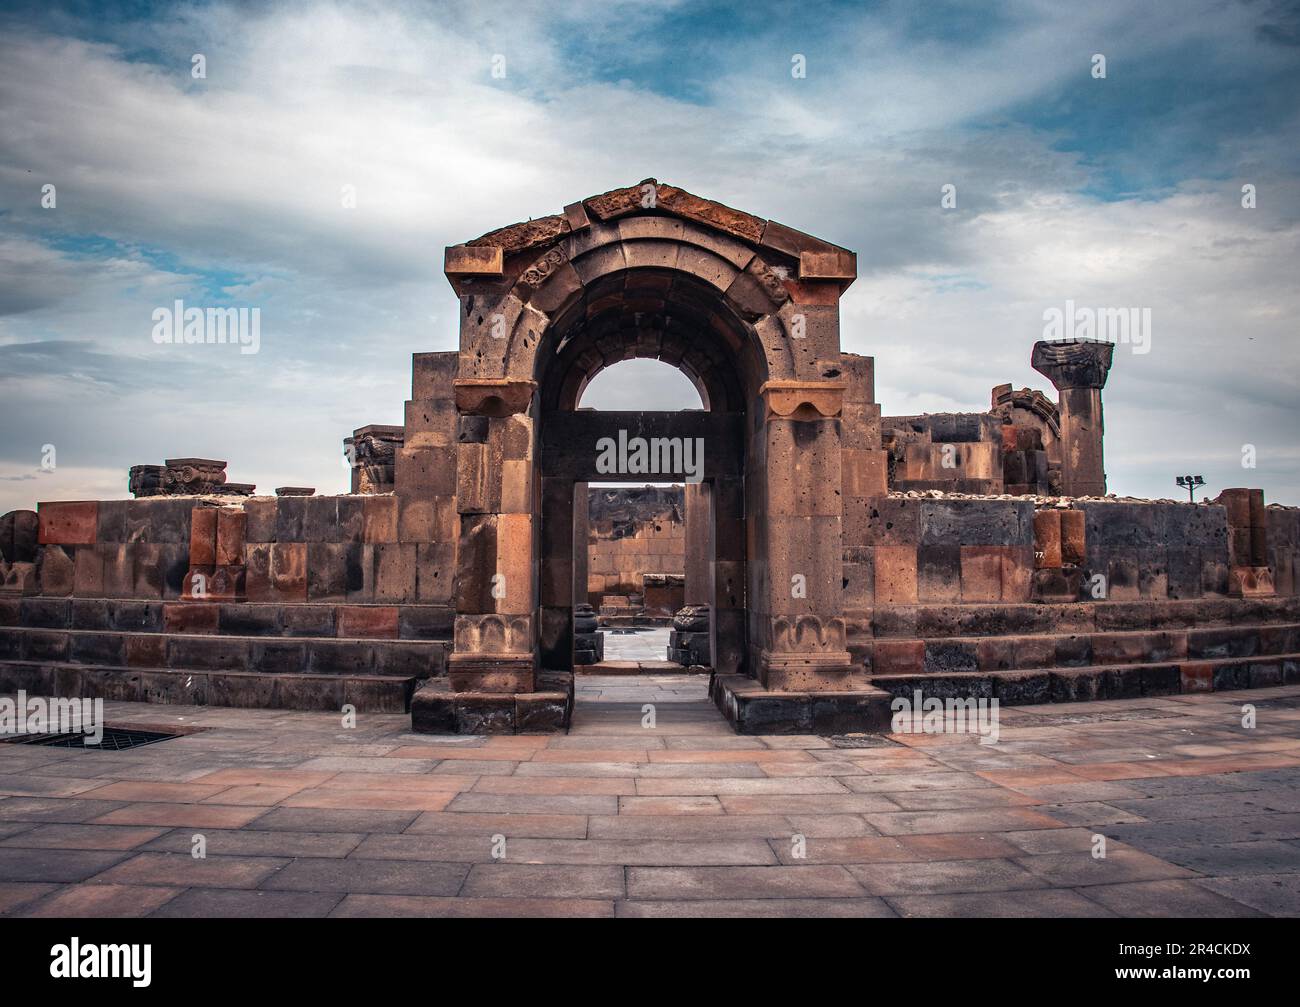 View of ancient doorway in Zvartnos temple in Armenia concept photo. Stock Photo